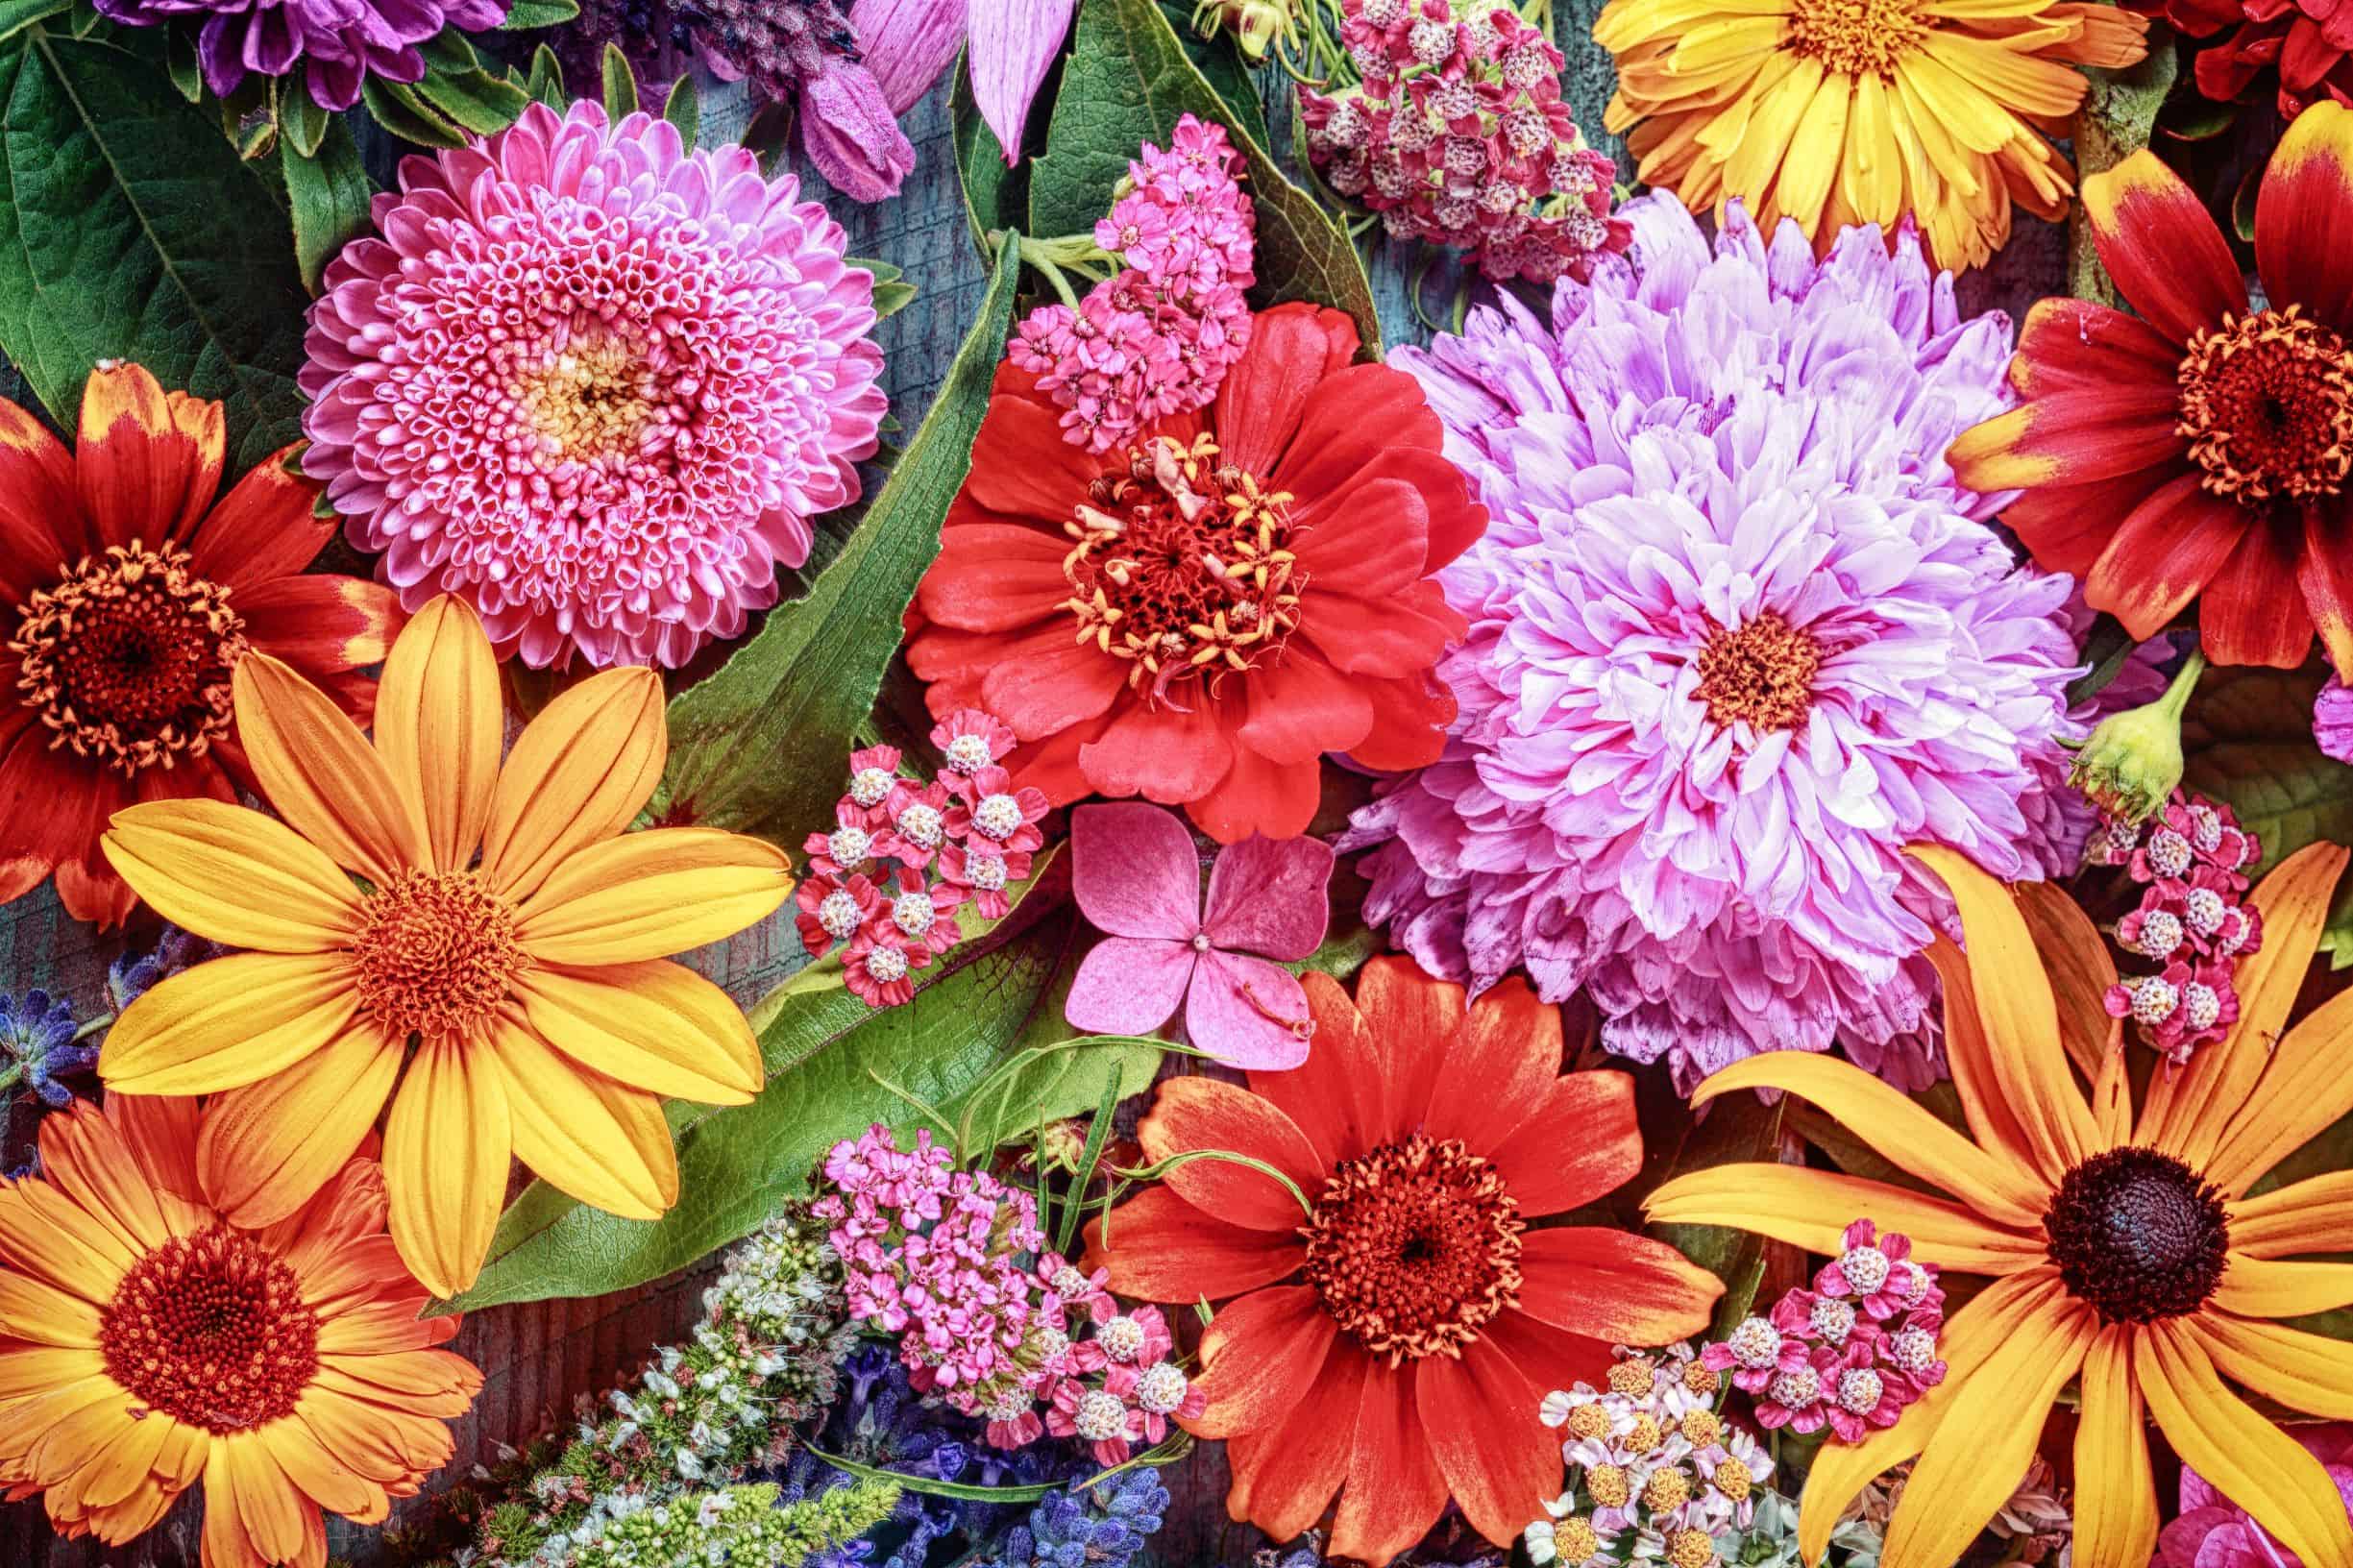 Birthdays, Birthstones, and Bouquets - Port Charlotte Florist Blog